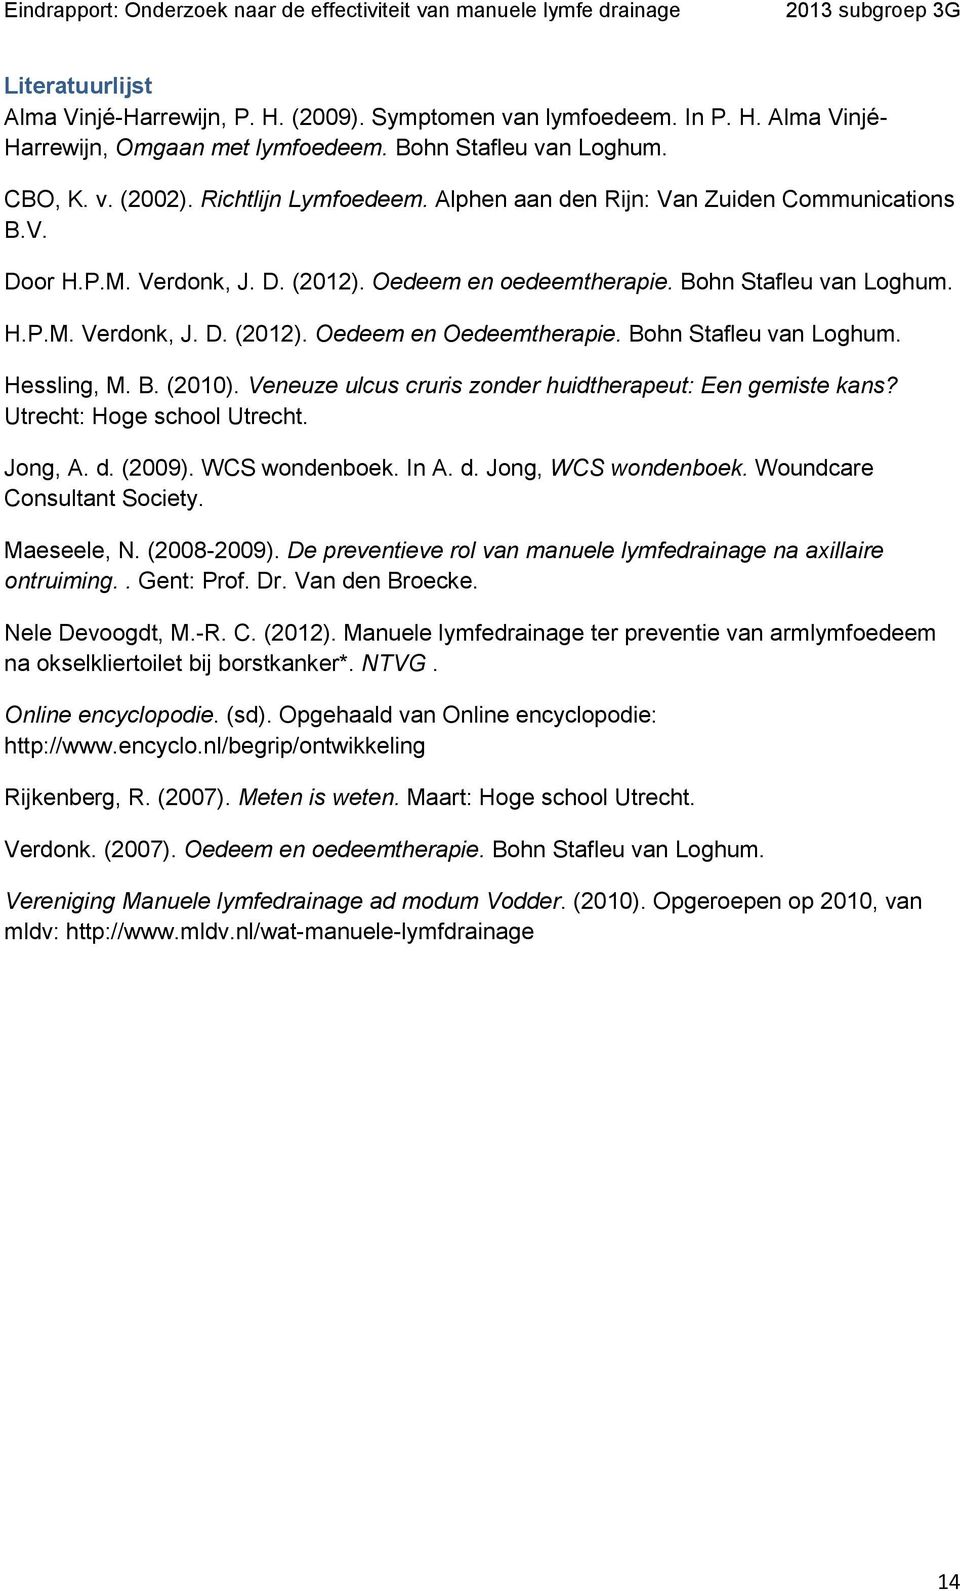 Bohn Stafleu van Loghum. Hessling, M. B. (2010). Veneuze ulcus cruris zonder huidtherapeut: Een gemiste kans? Utrecht: Hoge school Utrecht. Jong, A. d. (2009). WCS wondenboek. In A. d. Jong, WCS wondenboek.